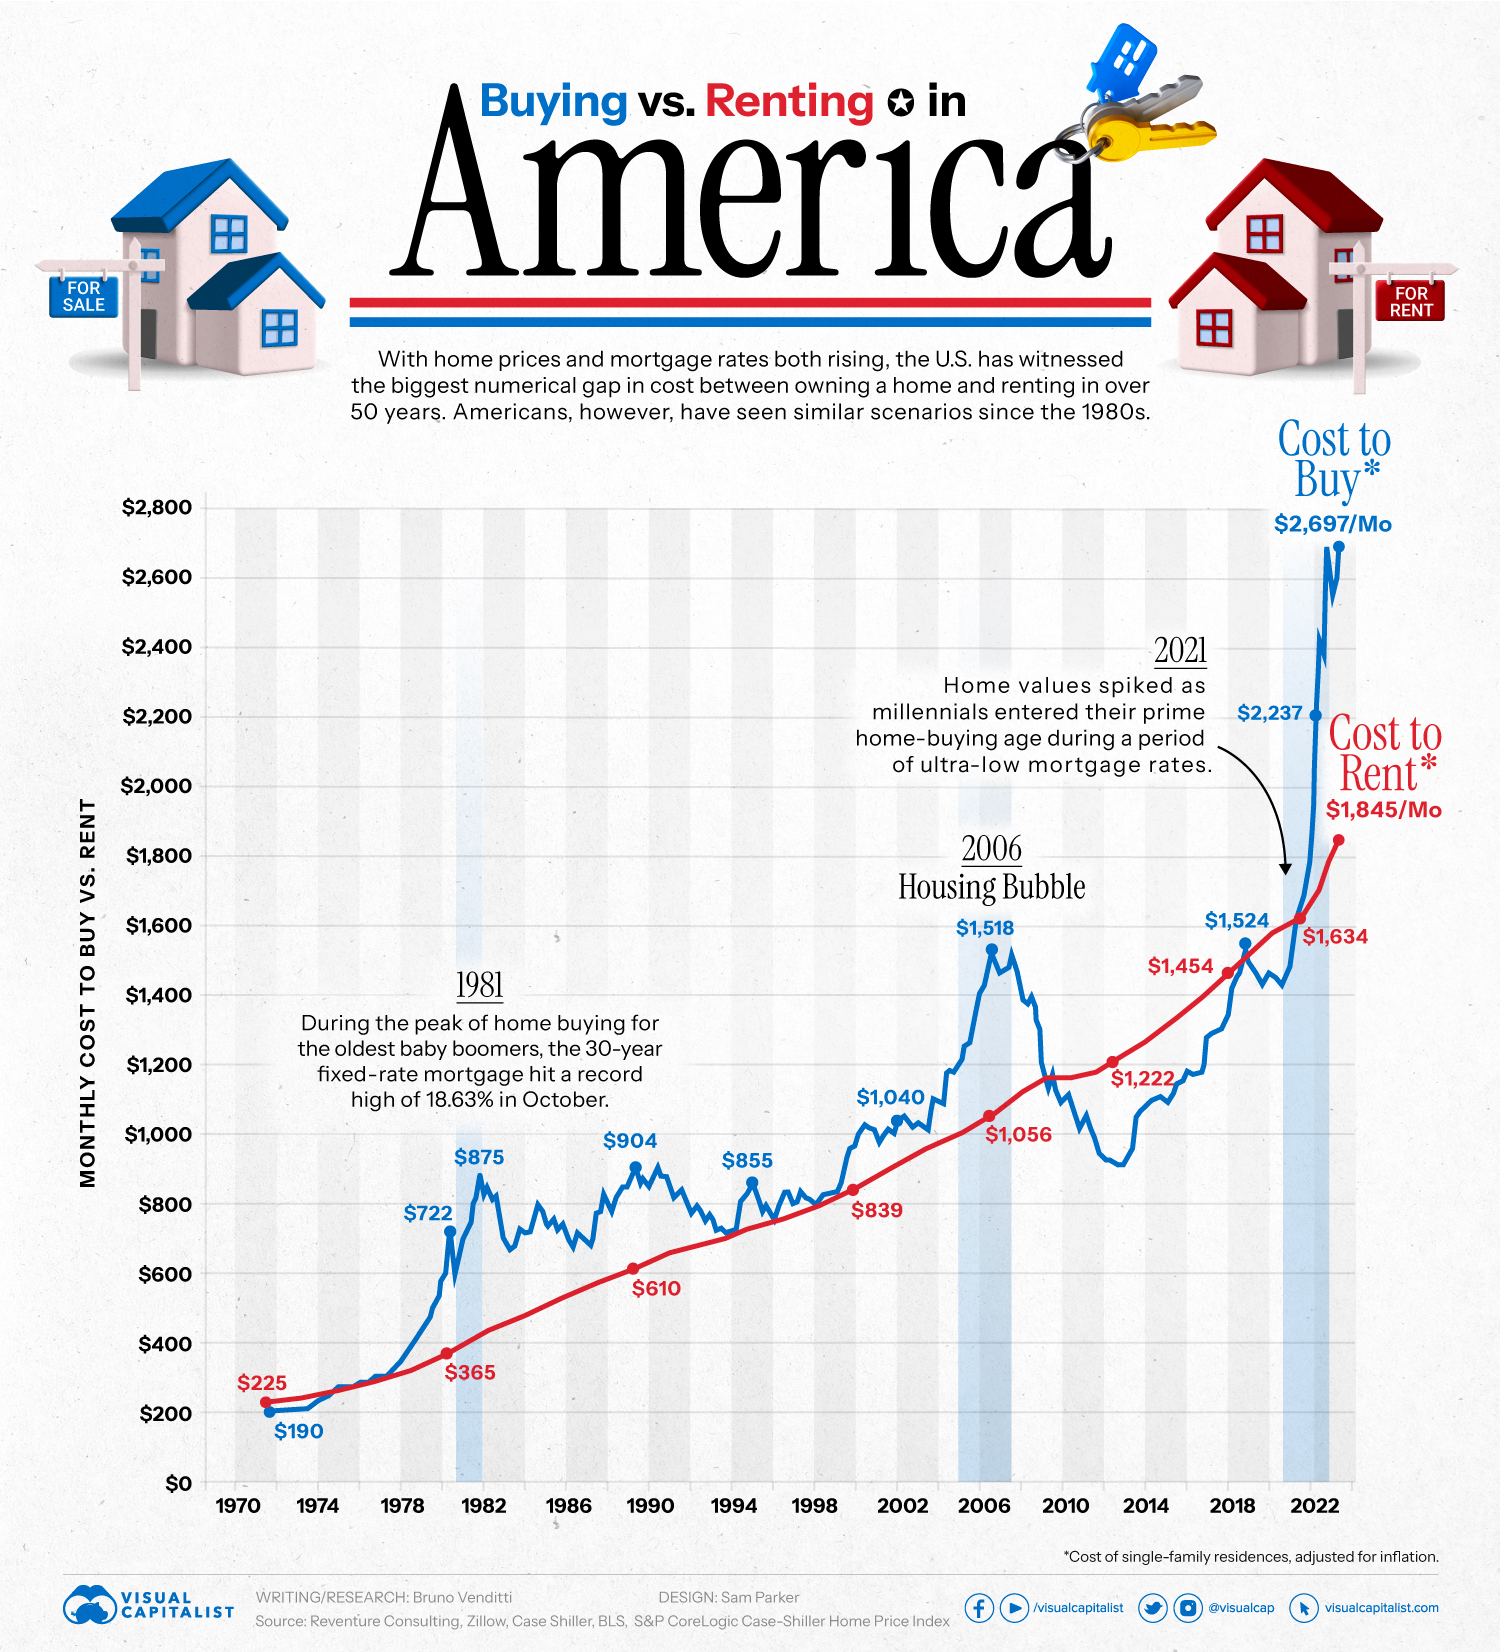 Buying vs. Renting in America